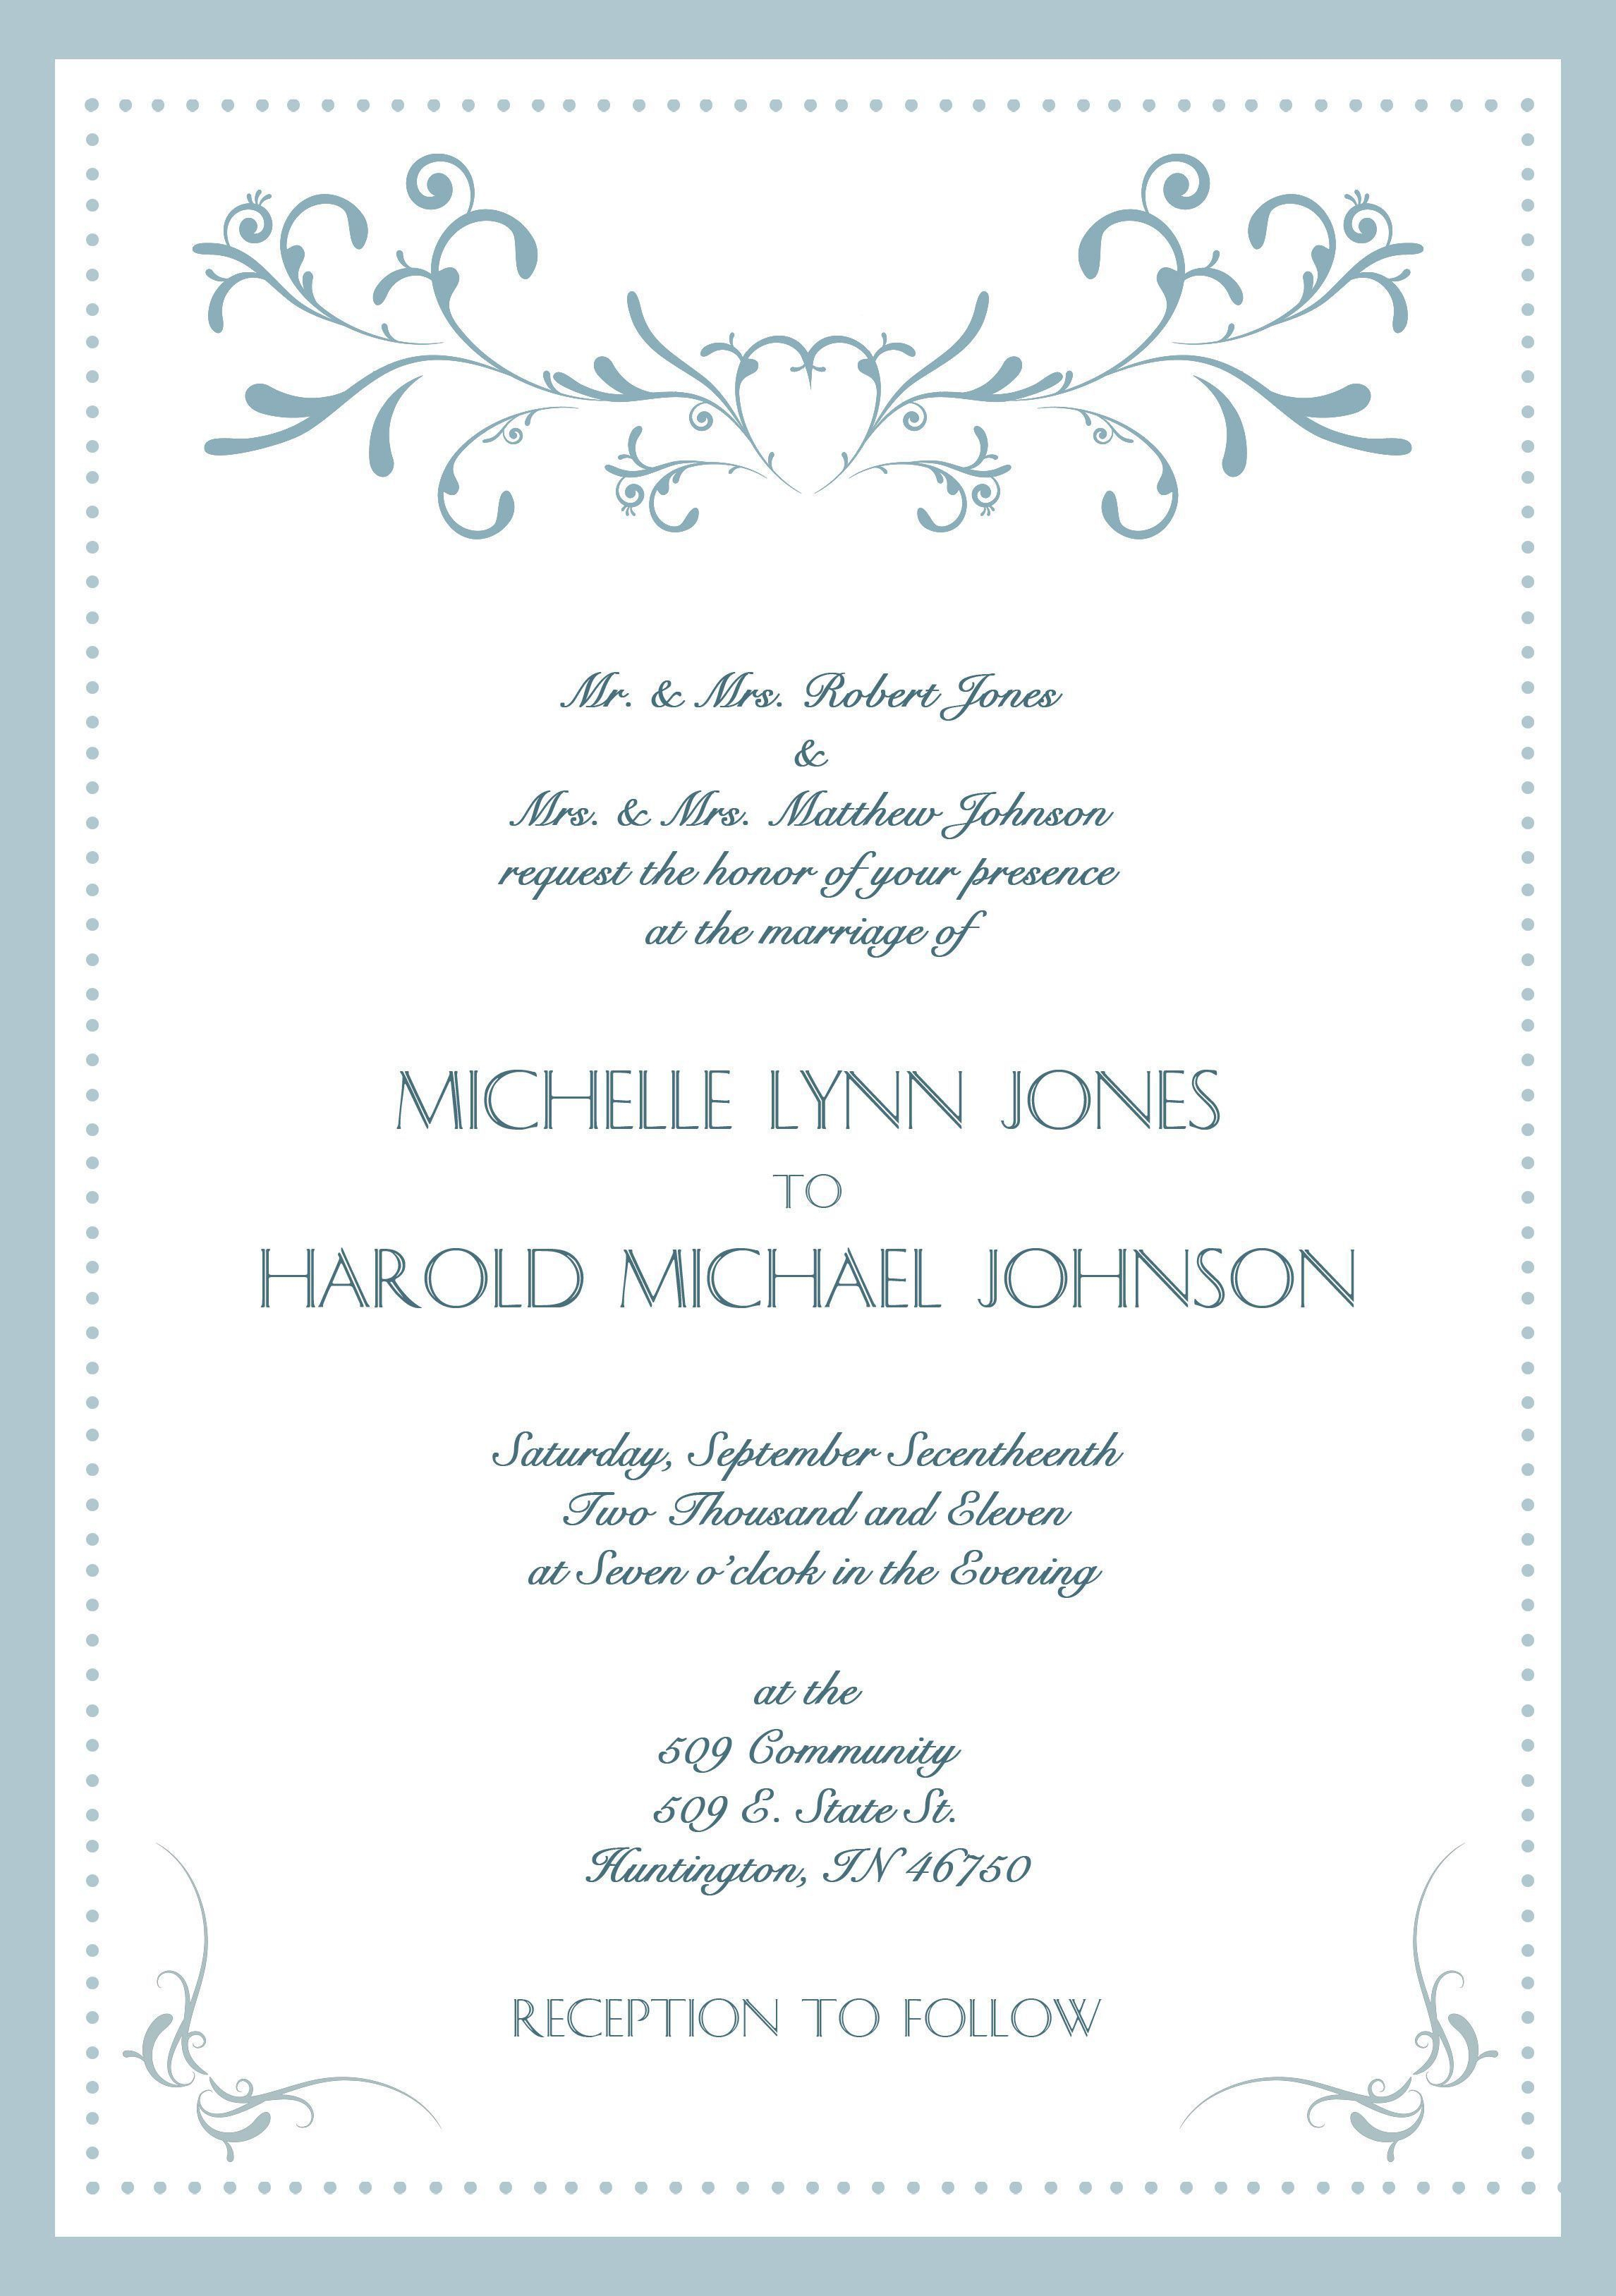 Sample Wedding Invitation Cards In English | Wedding Pertaining To Sample Wedding Invitation Cards Templates